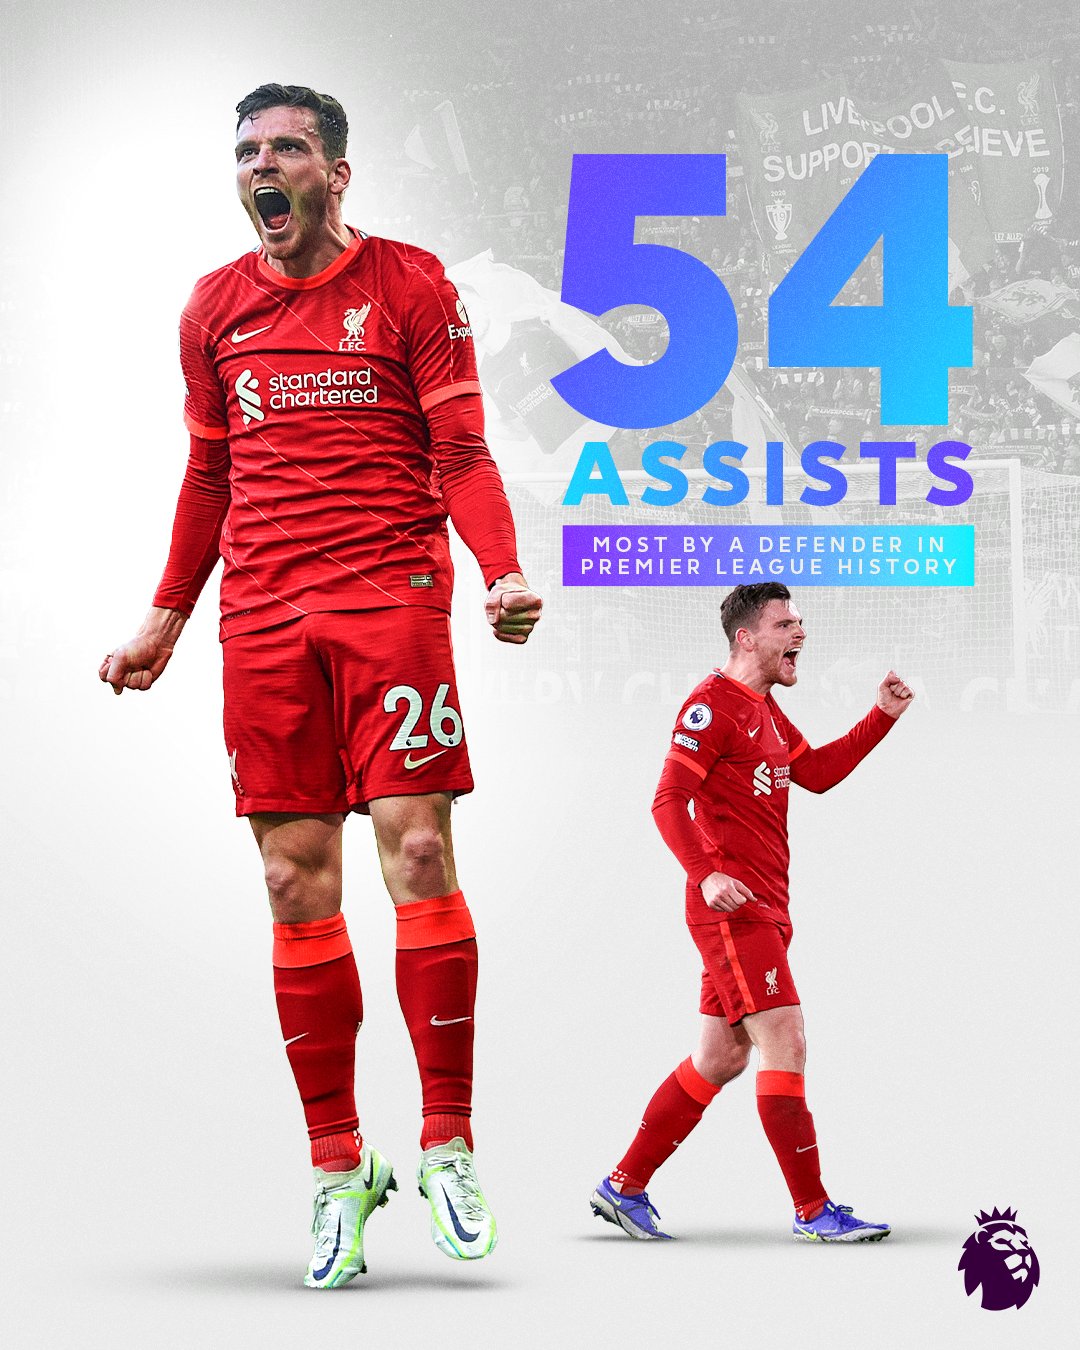 Premier League on "Most assists by a defender Premier League history 👑 Congratulations, @andrewrobertso5! https://t.co/B9pxwfWt0x" / Twitter